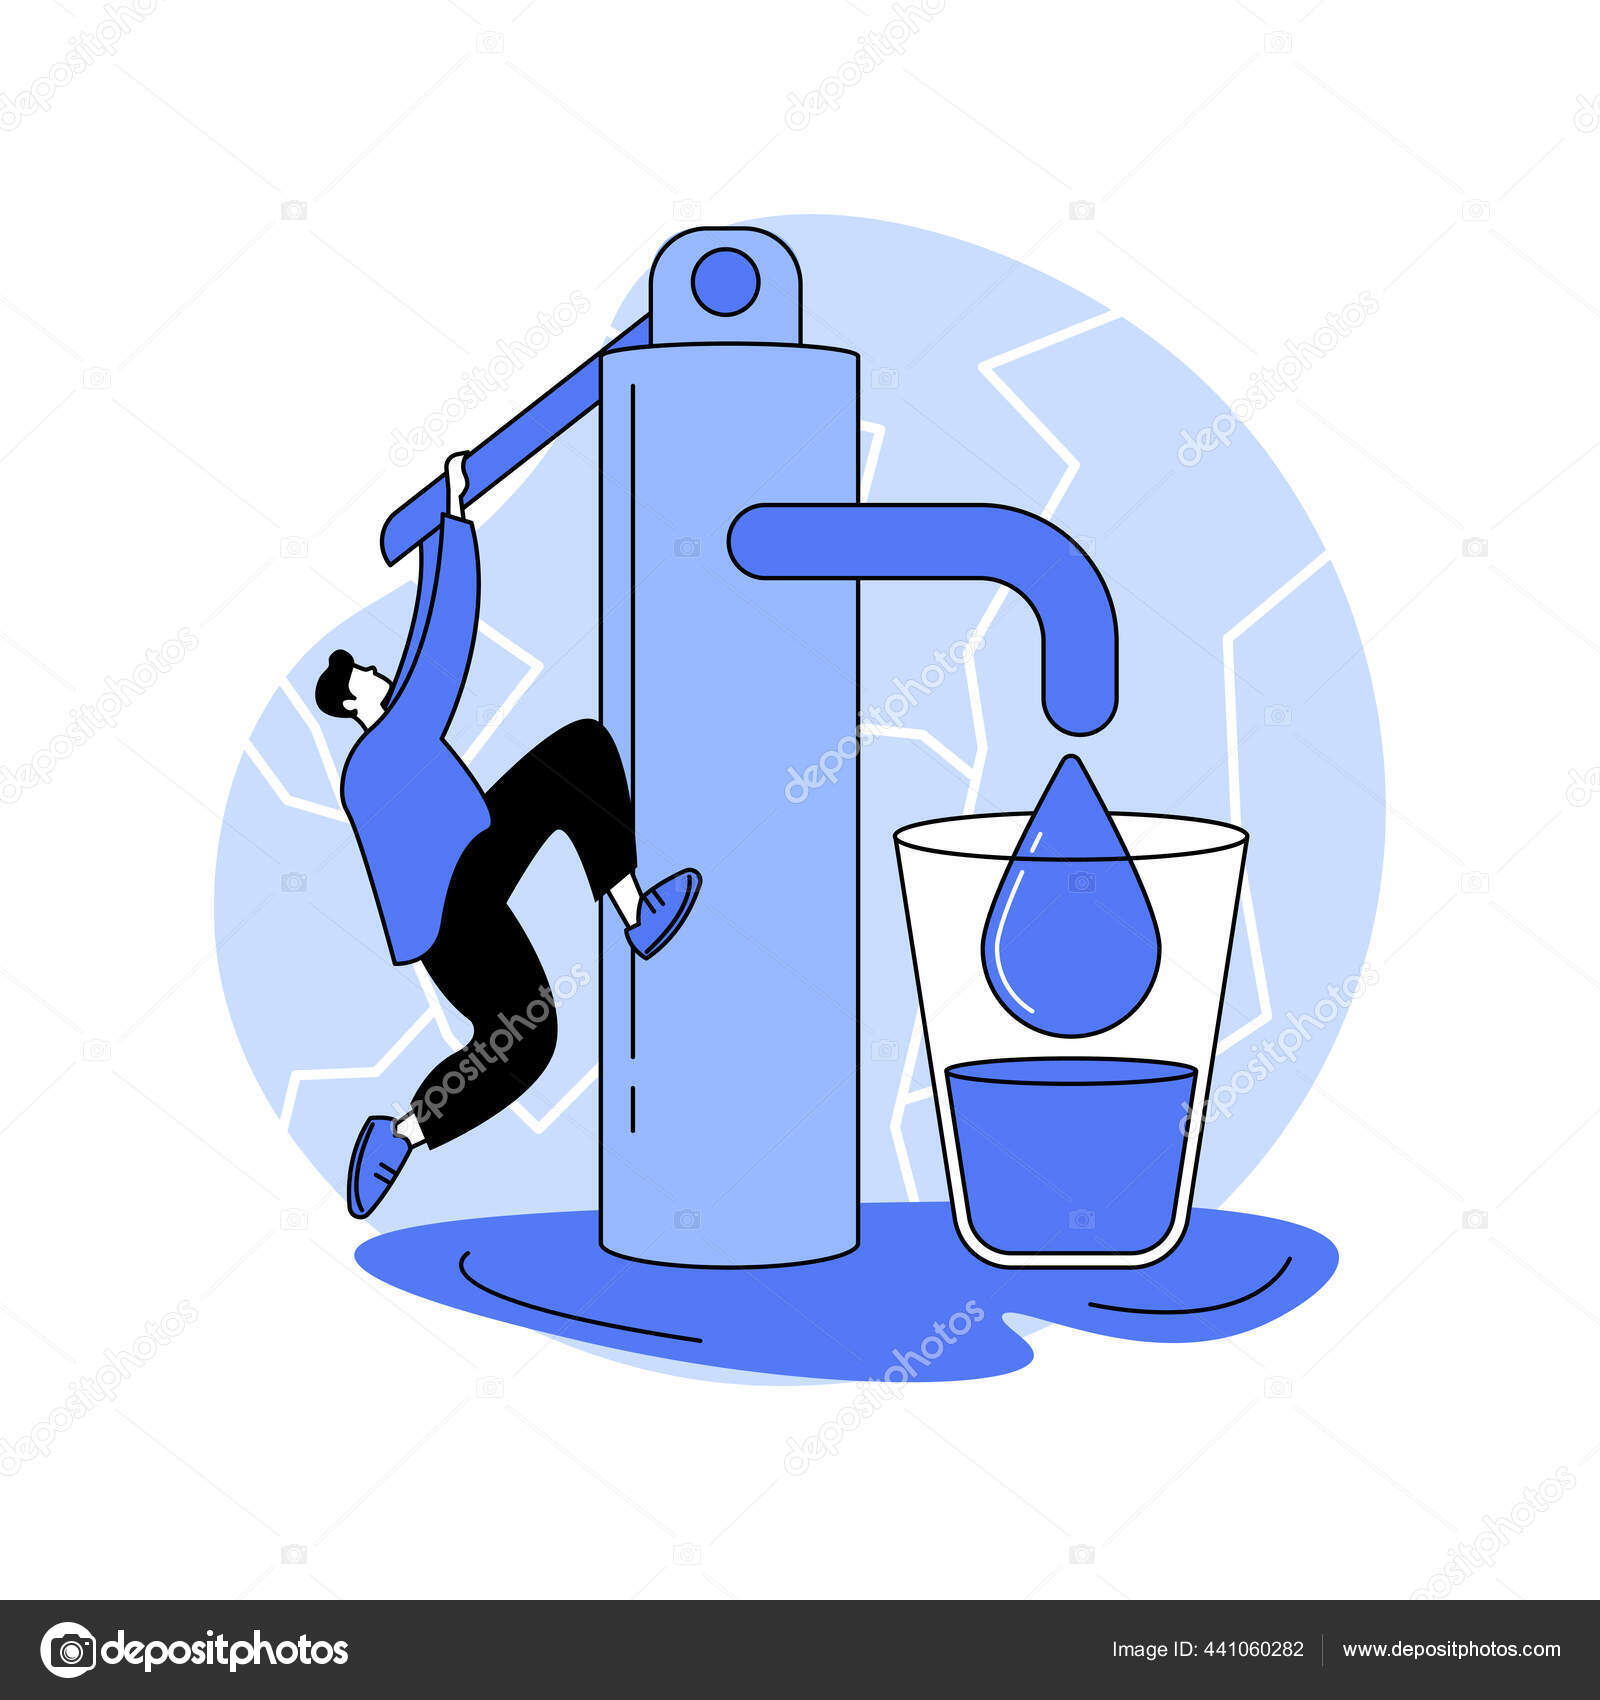 101 ilustraciones de stock de Escasez de agua | Depositphotos®